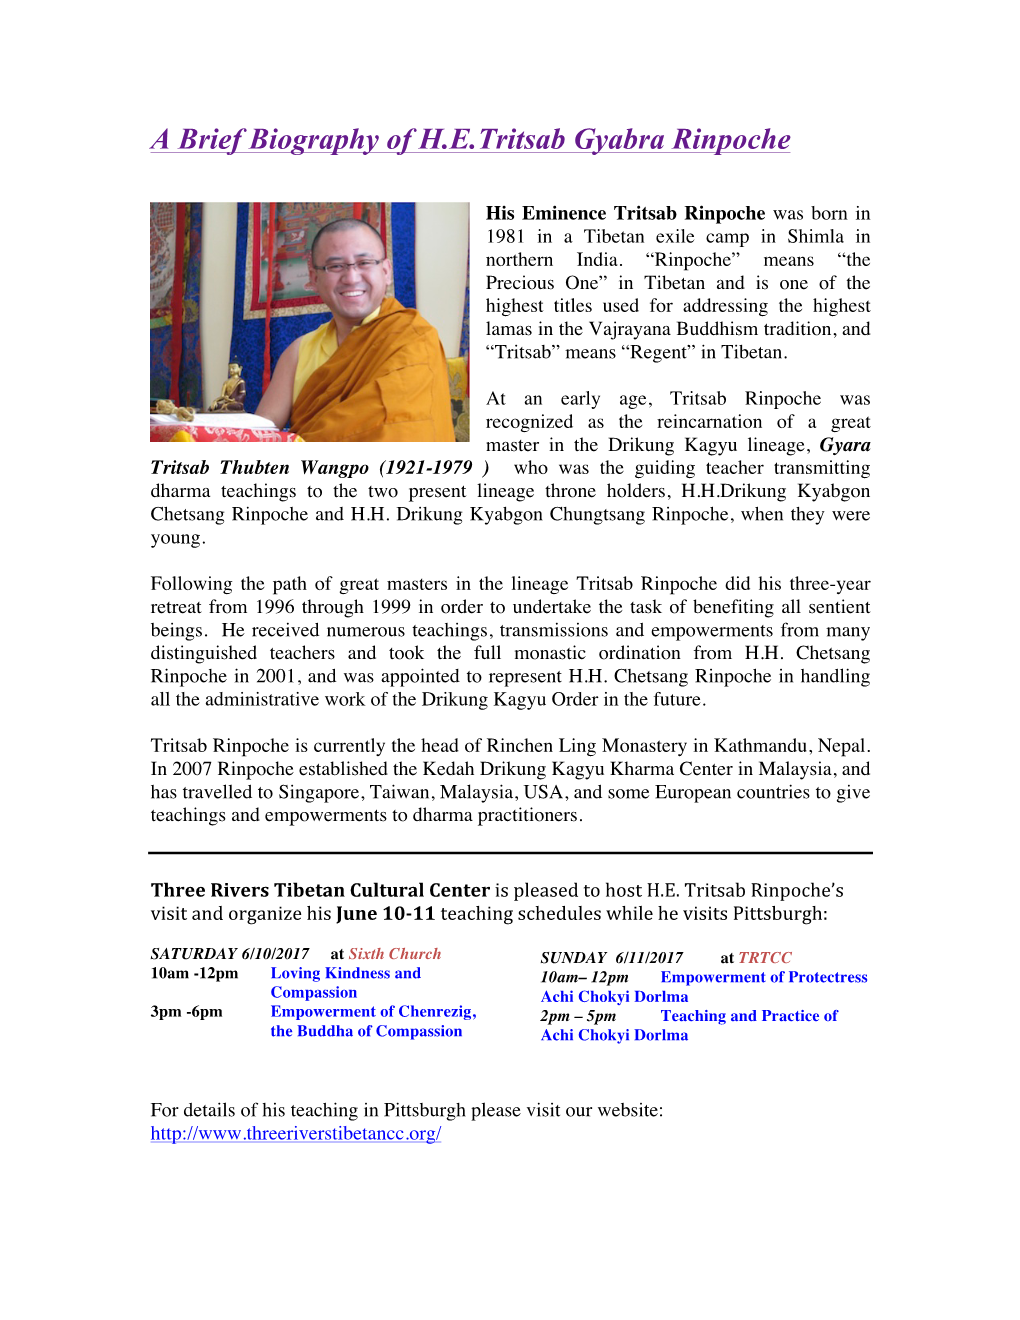 His Eminence Tritsab Rinpoche Brief Biography